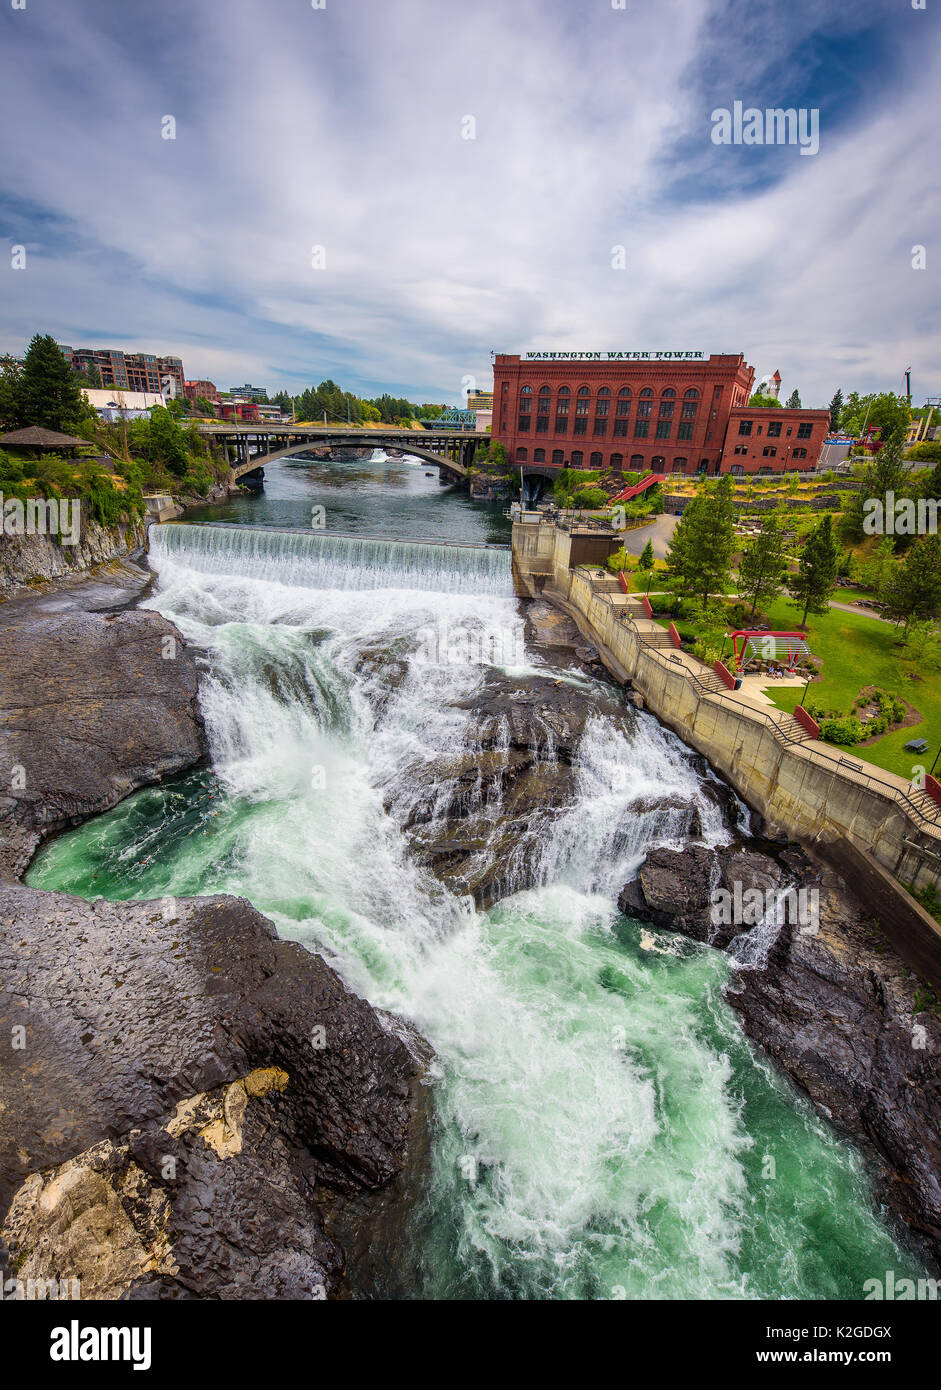 Falls and the Washington Water Power building along the Spokane river viewed from the Monroe Street Bridge. Stock Photo